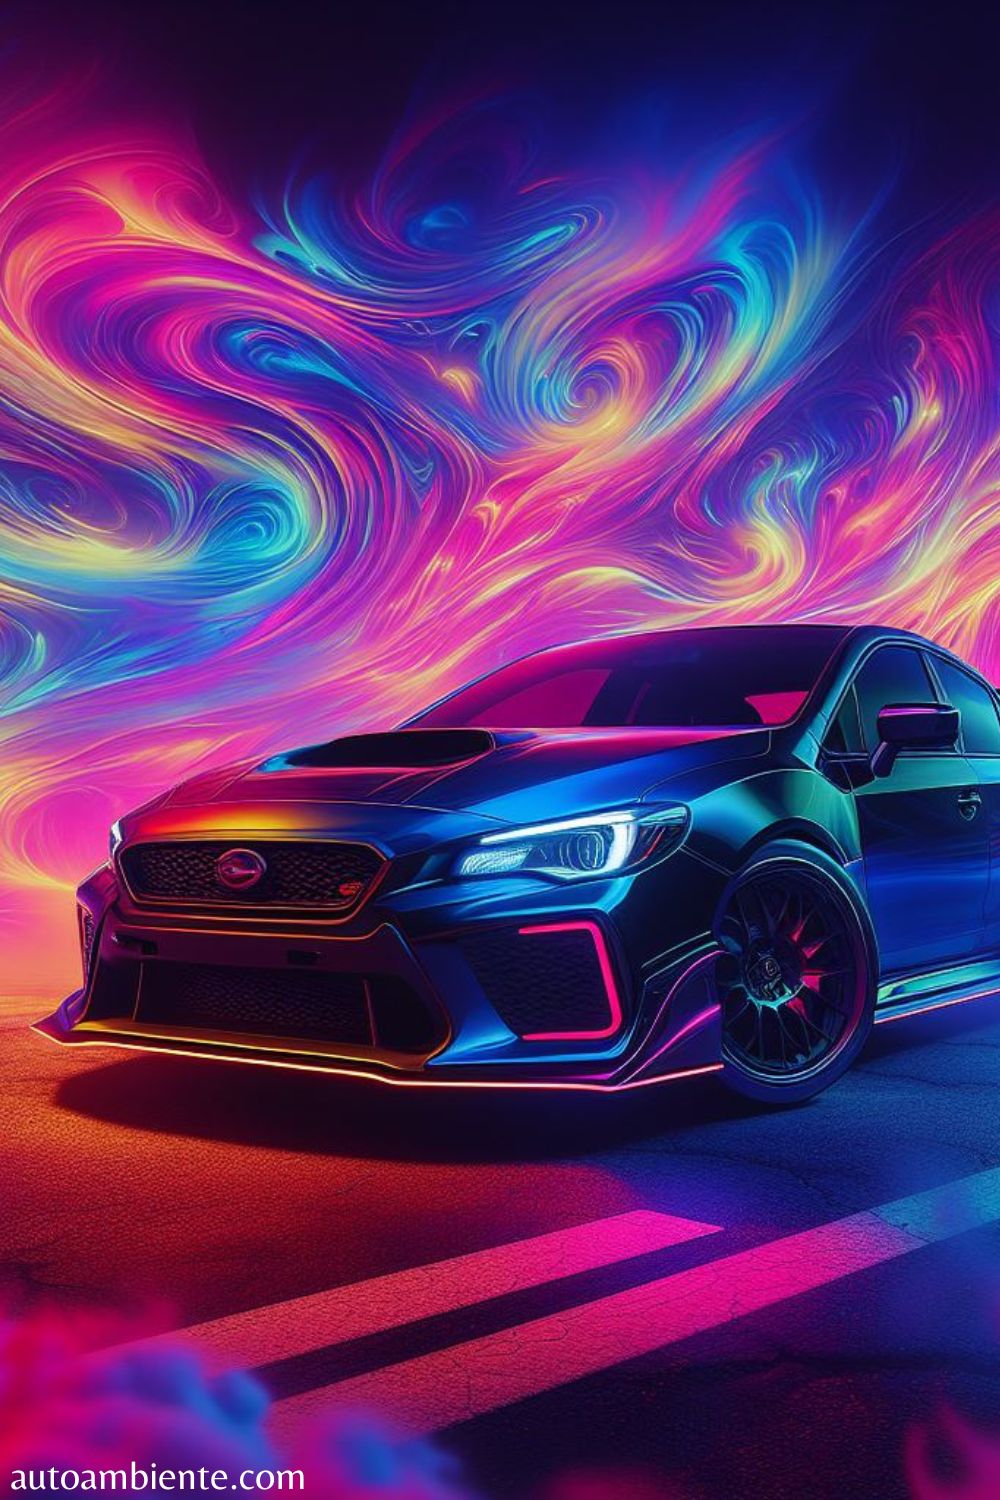 cool cars wallpaper